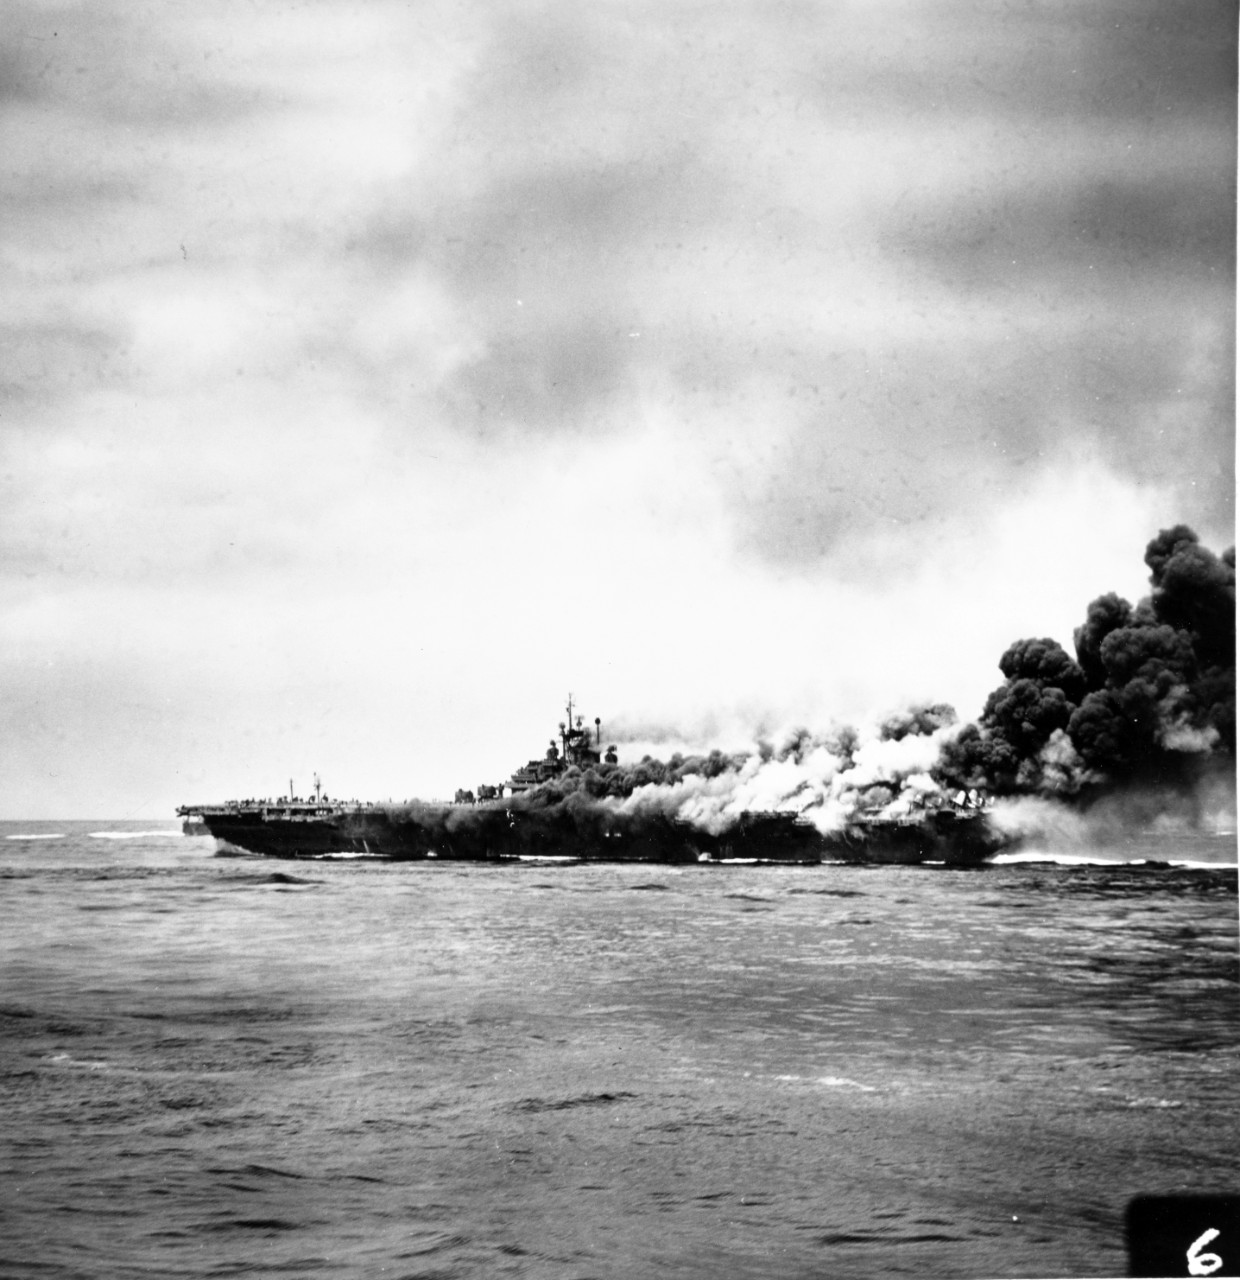 Okinawa campaign, 1945.